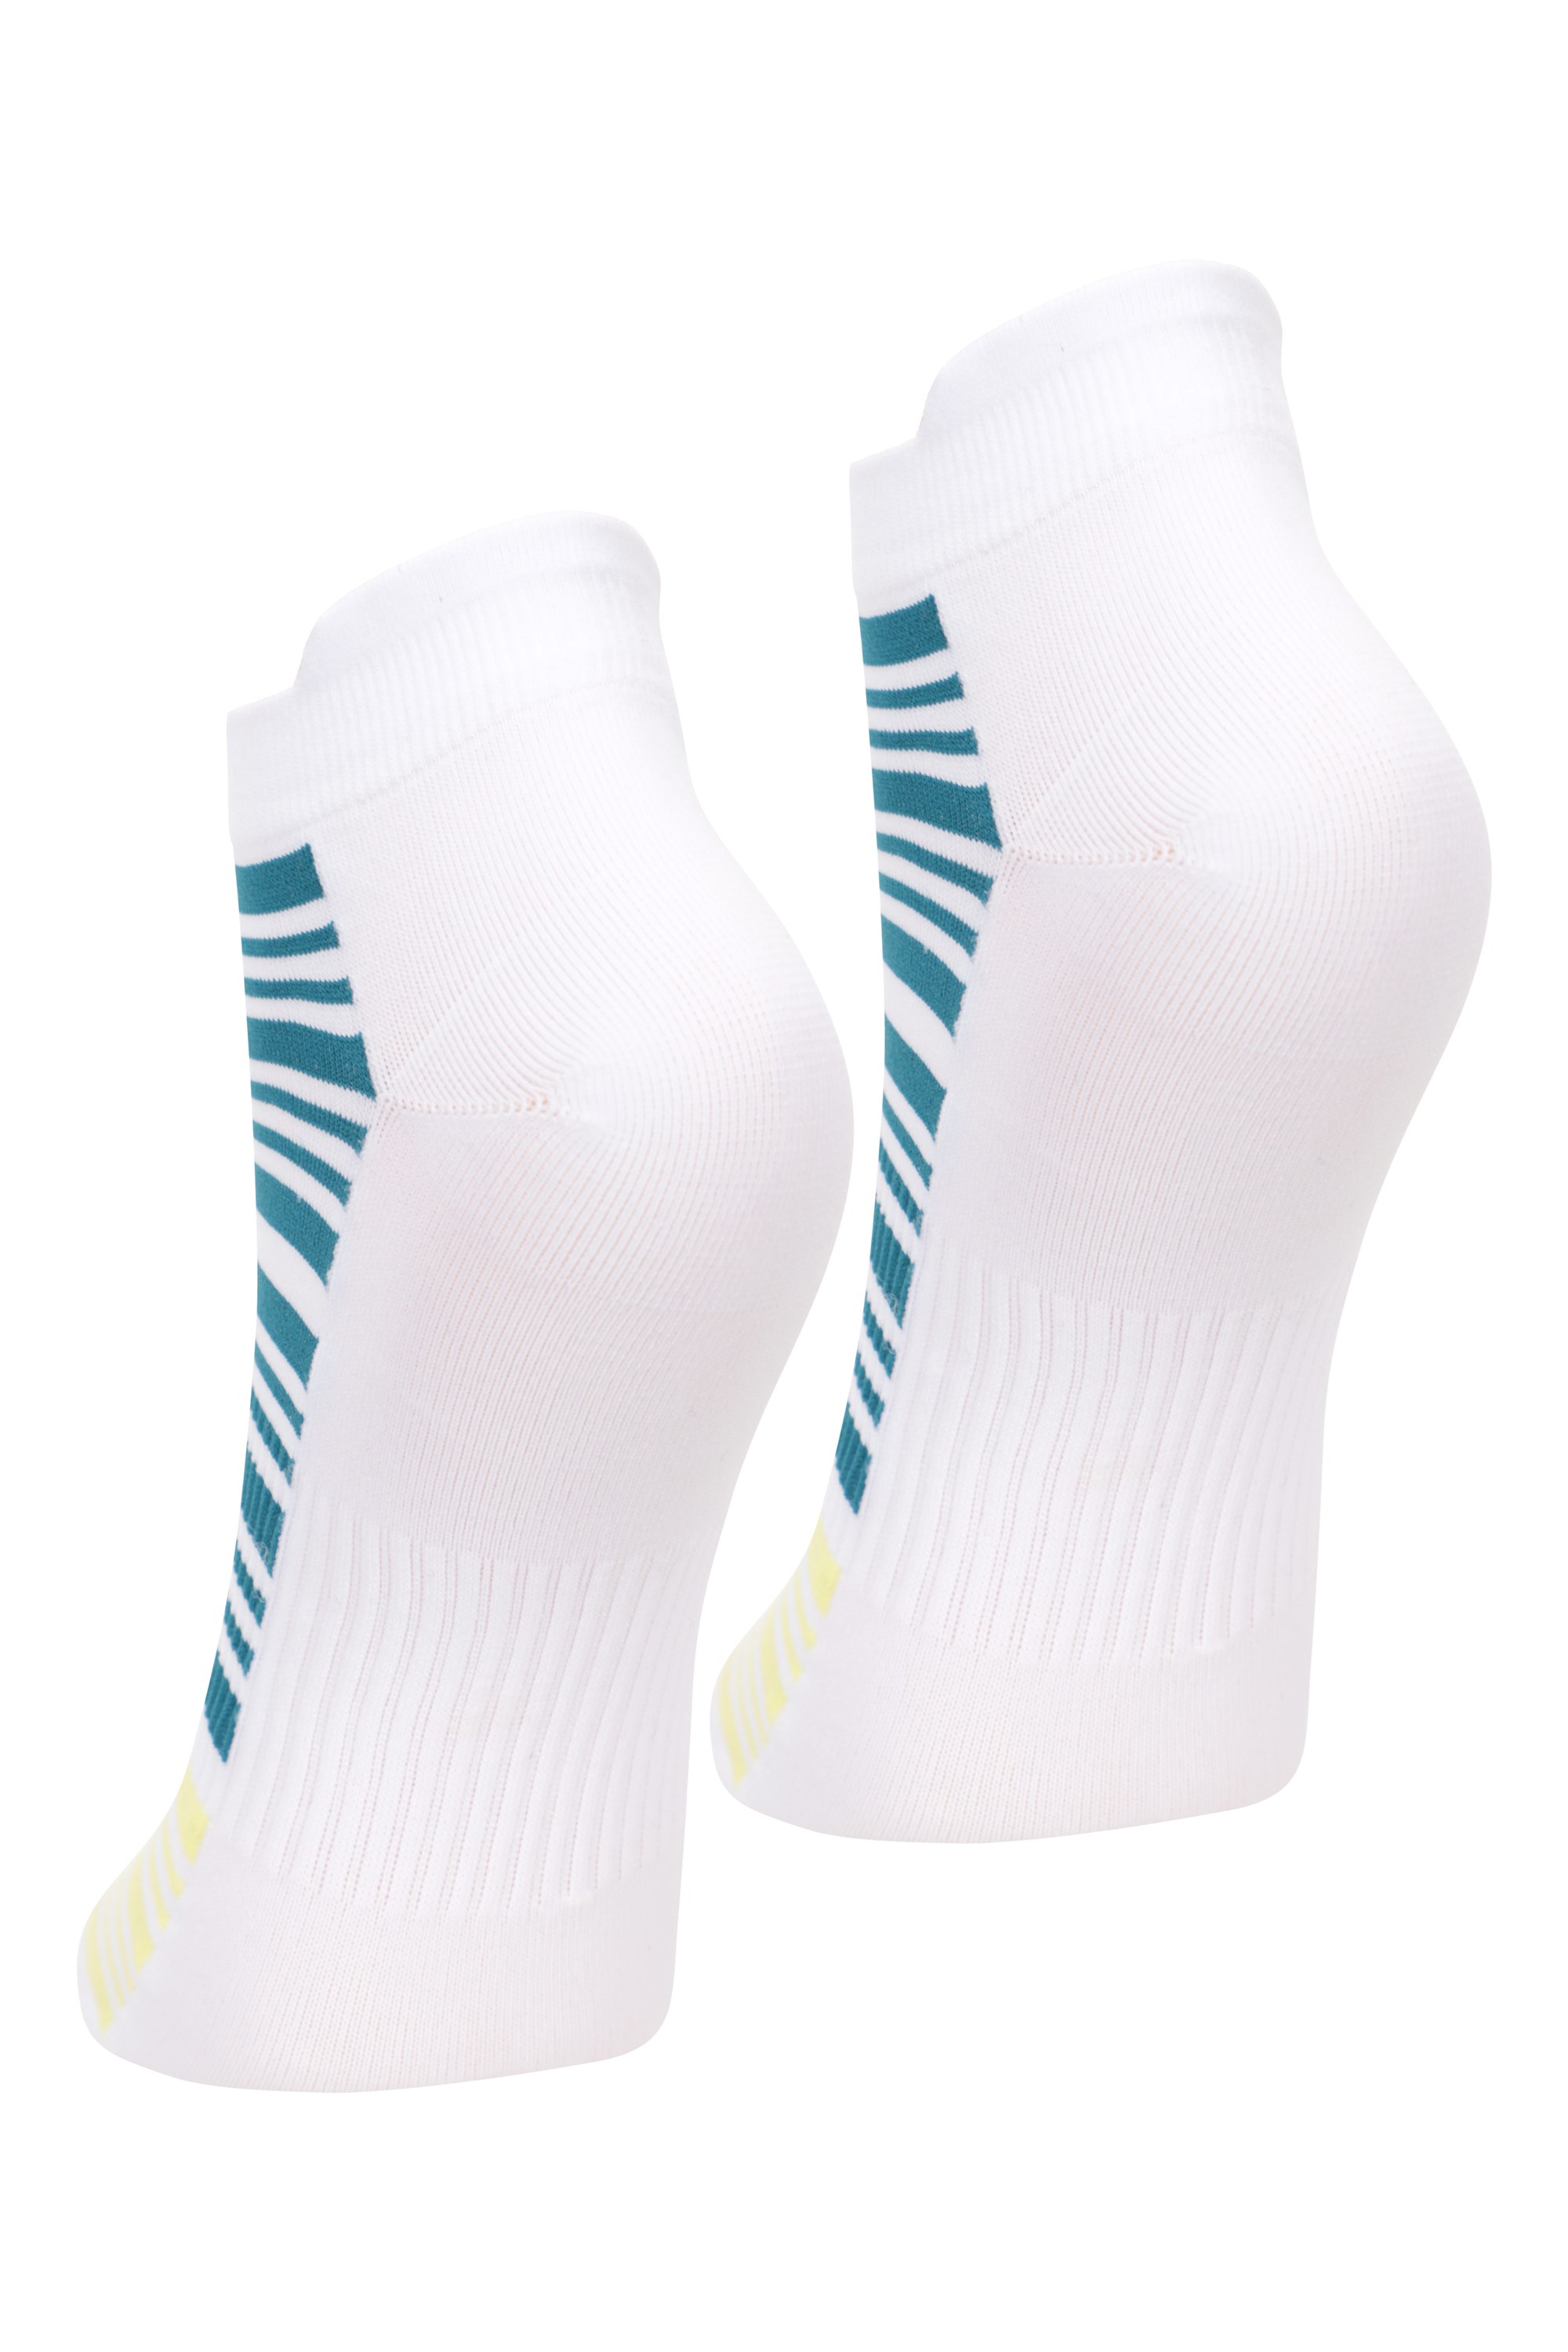 IsoCool Mountain Warehouse Mountain Warehouse Graphic Stripe Womens Seamless Running Socks 2 Pack 